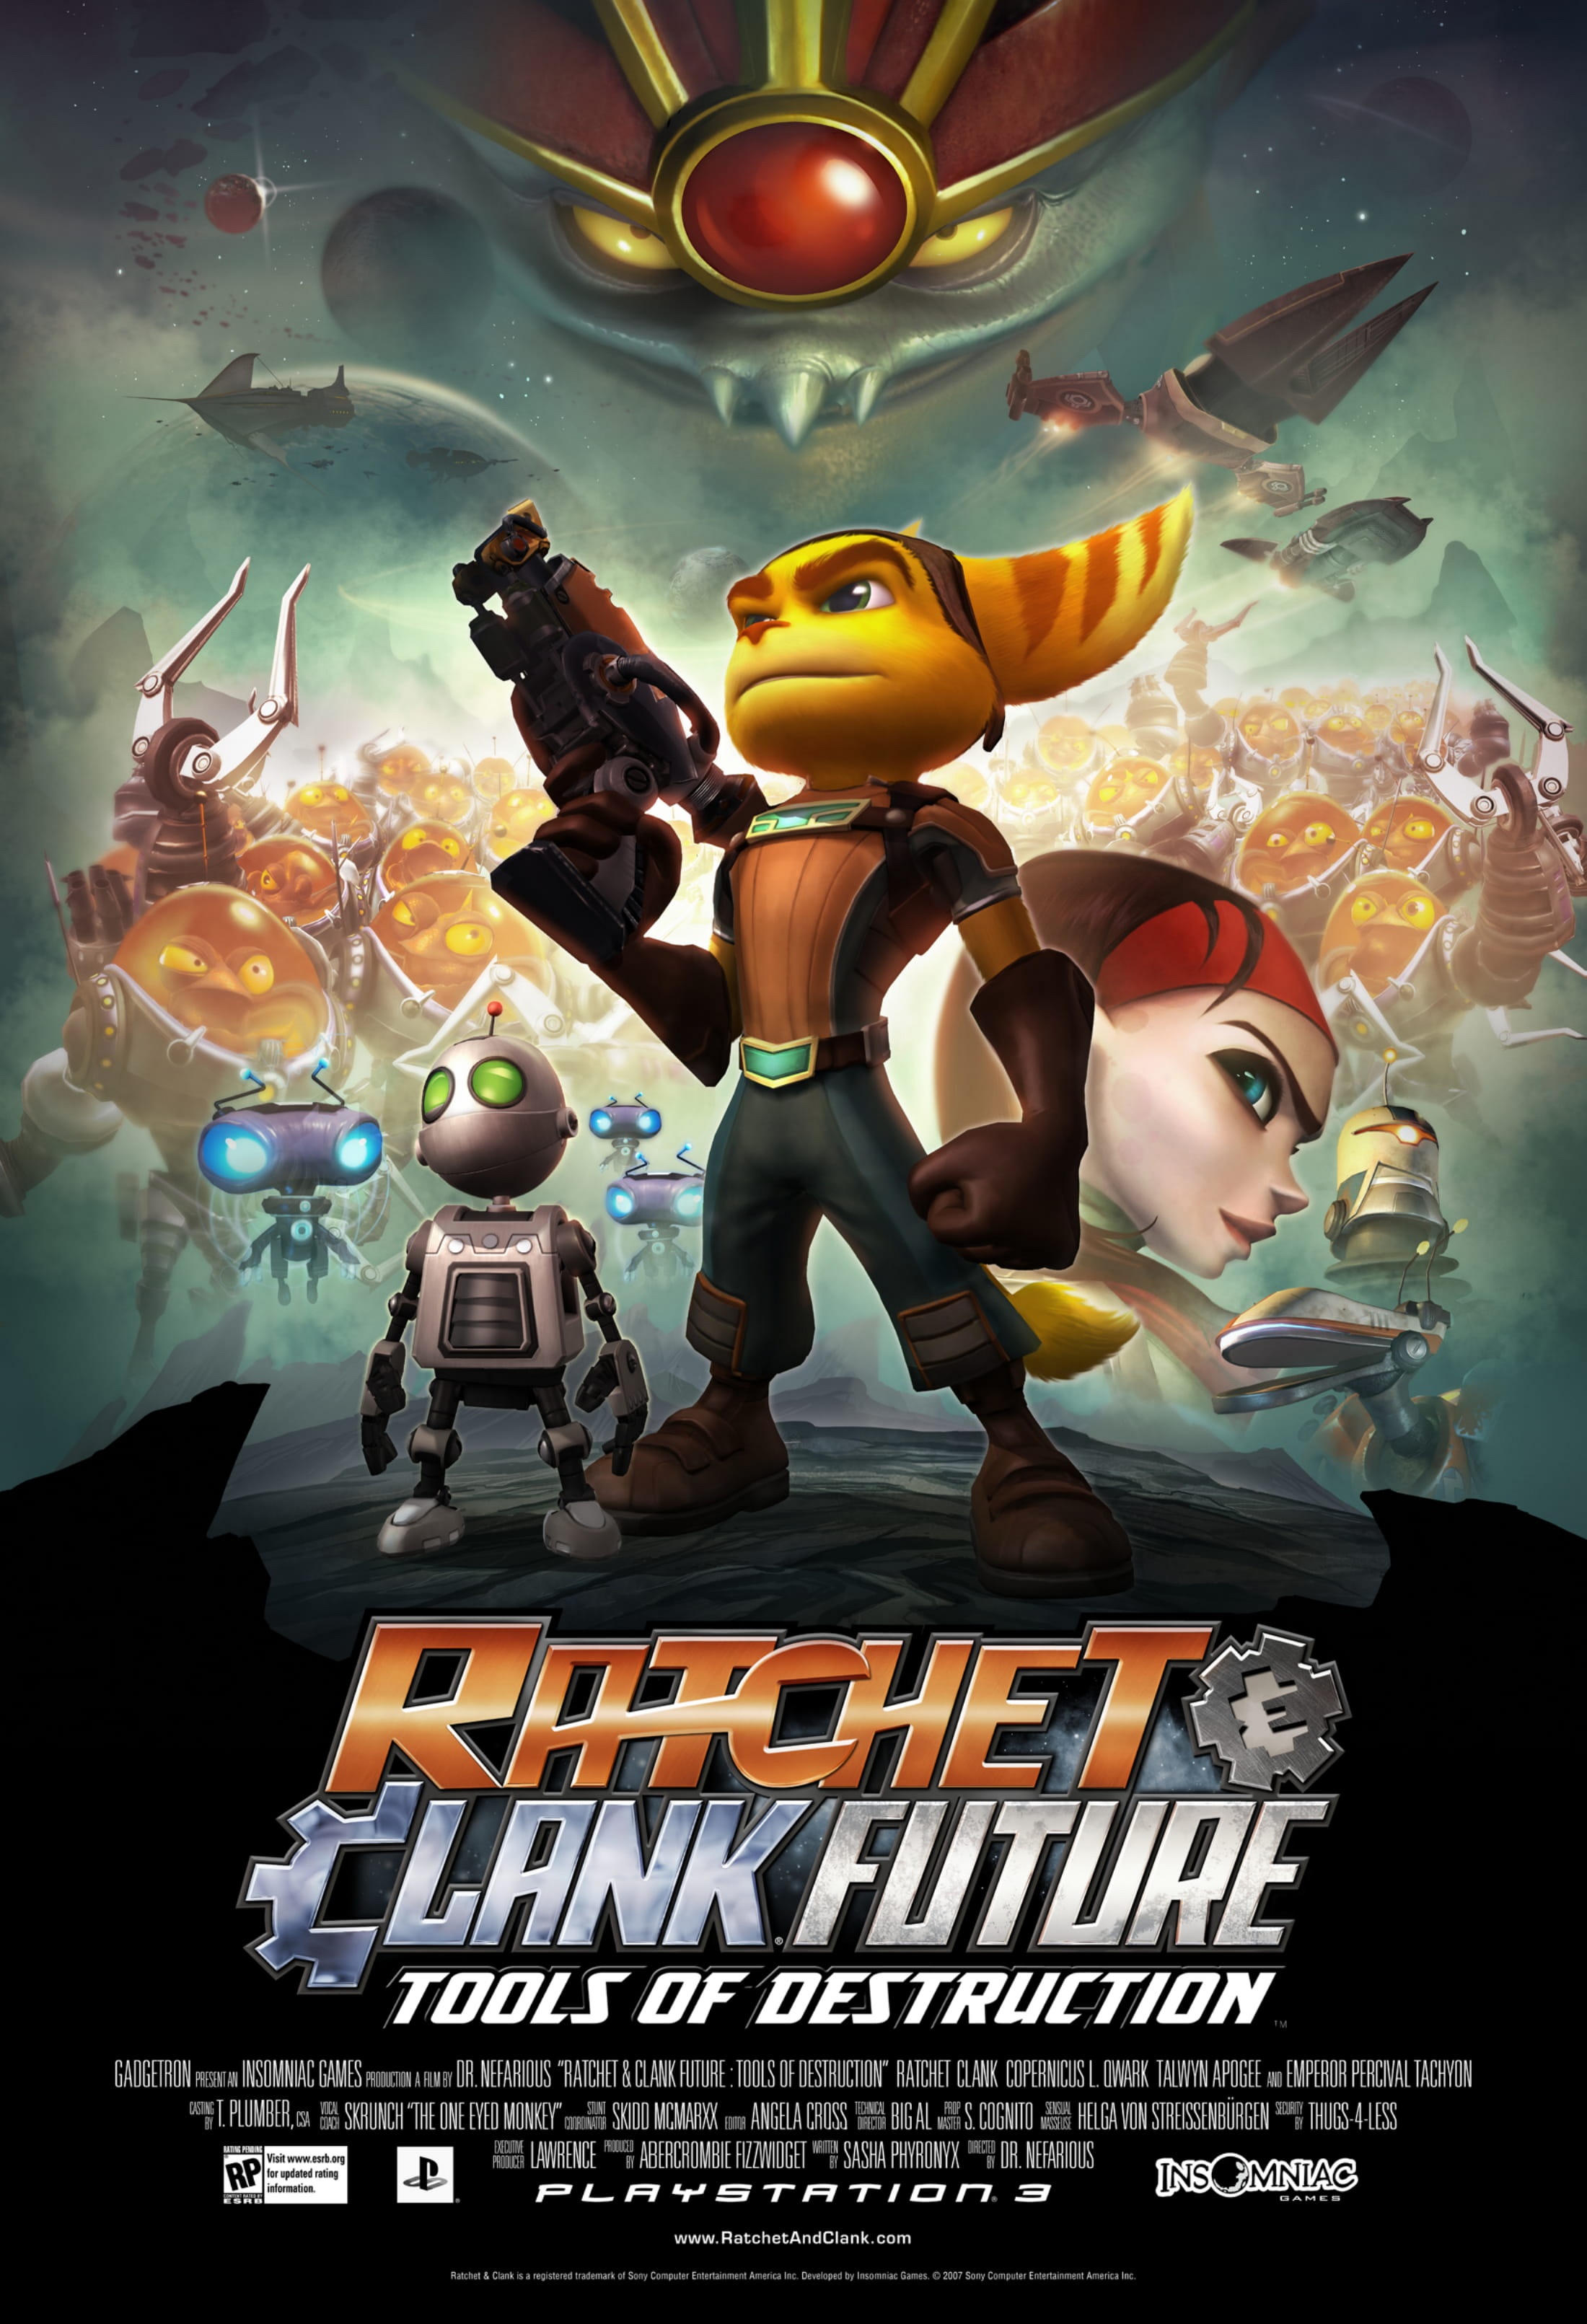 Ratchet & Clank Future: Tools of Destruction - Wikipedia